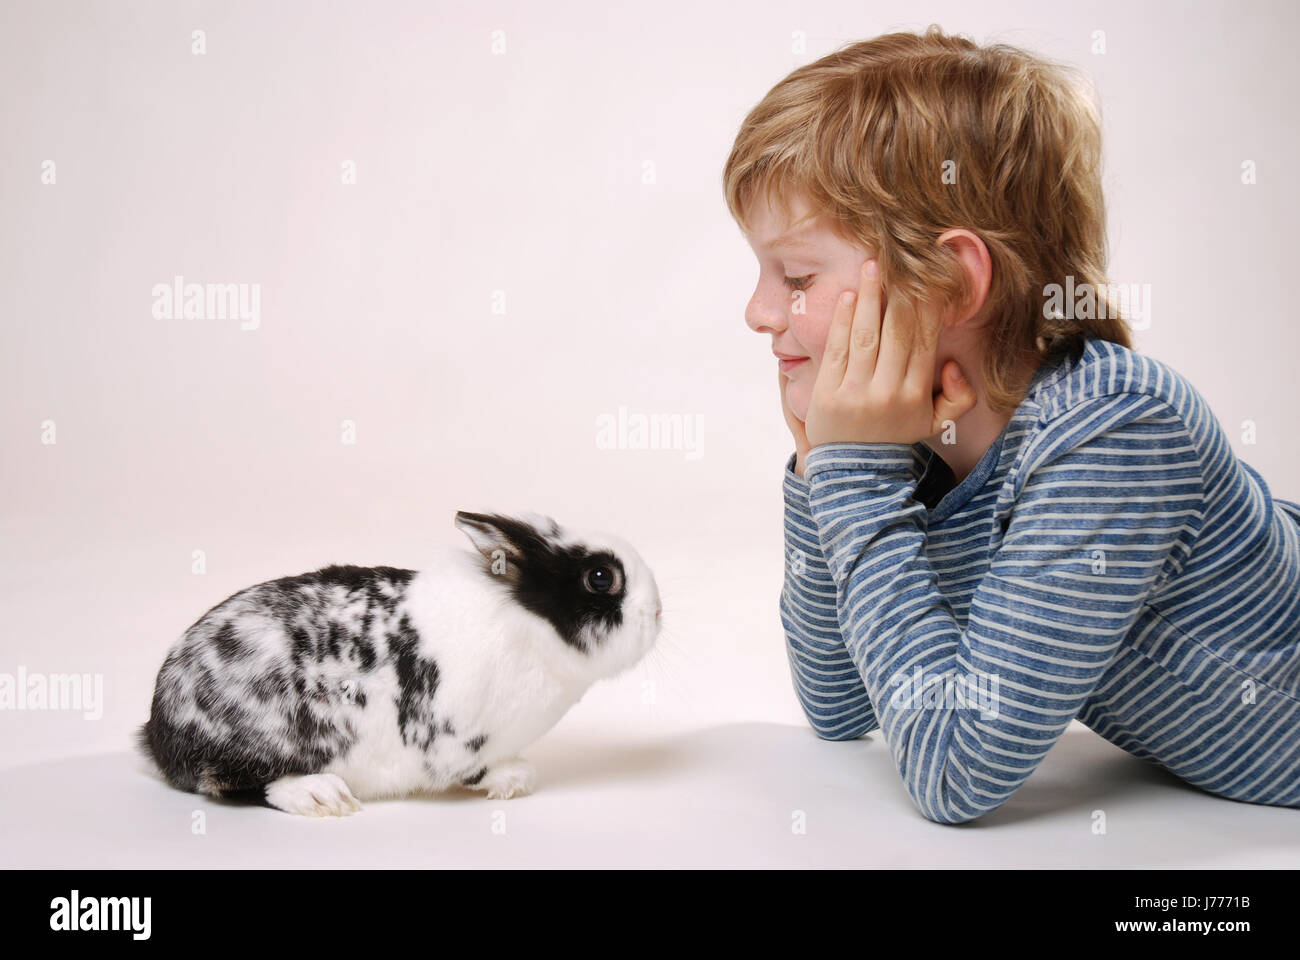 boy with rabbit Stock Photo